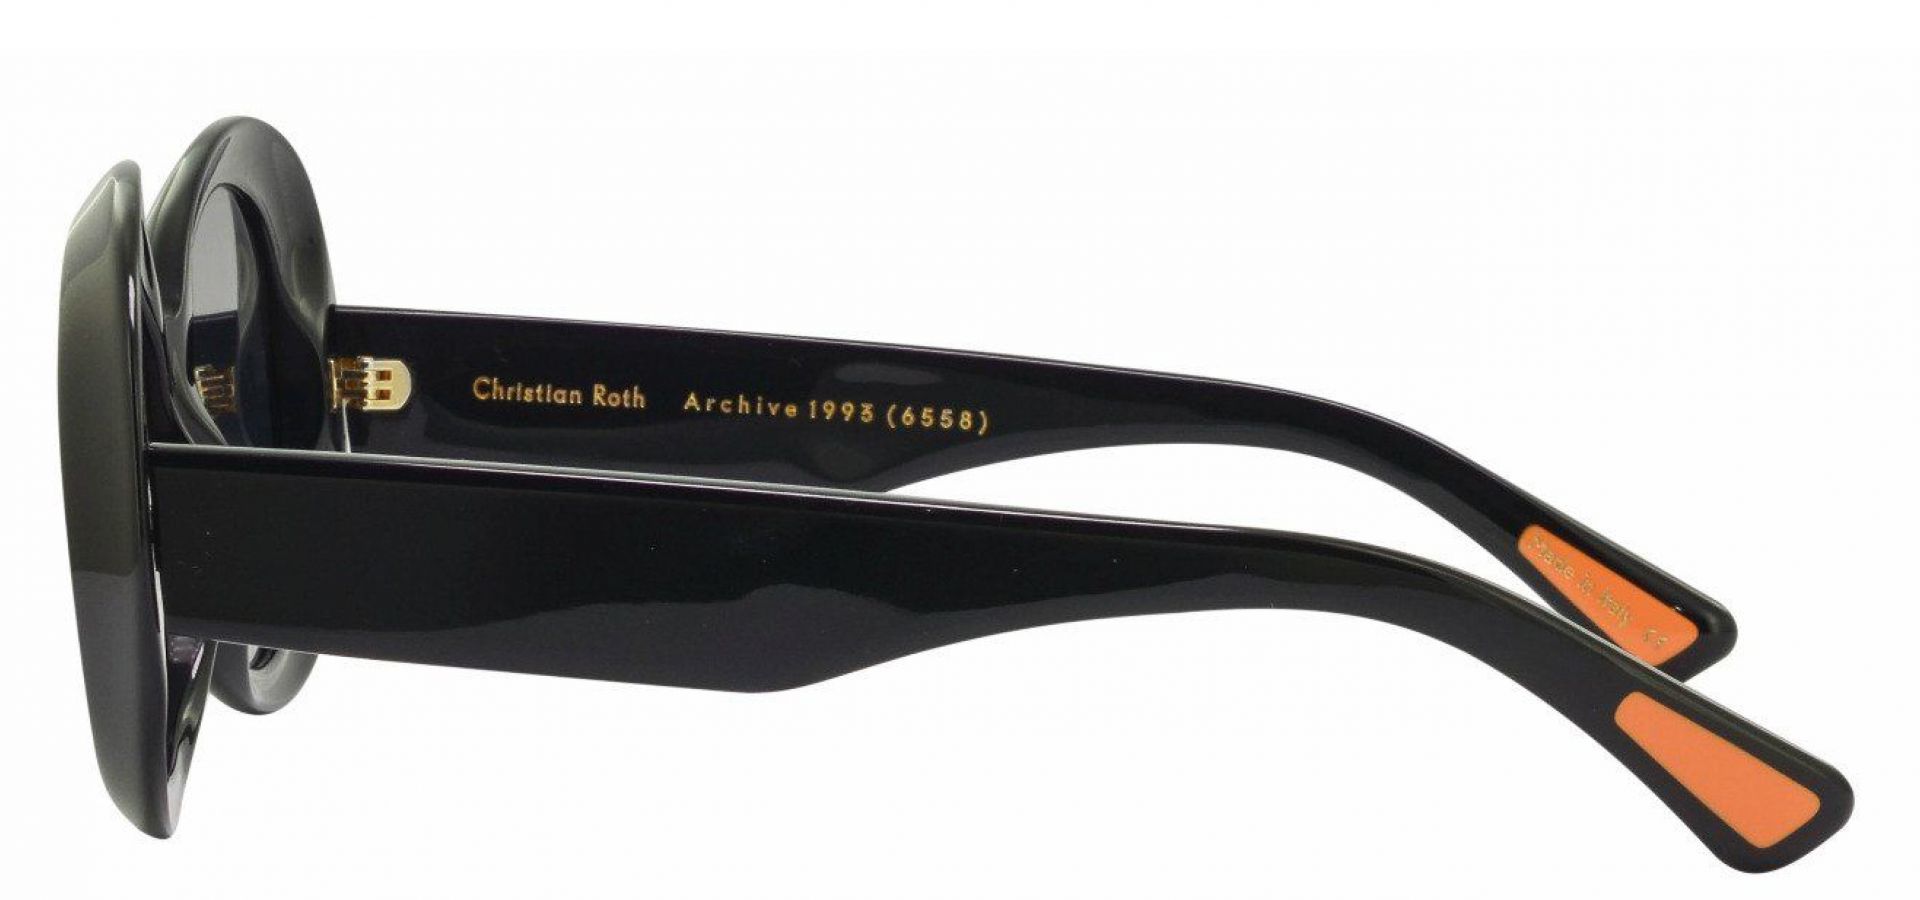 Sončna očala Christian Roth ARCHIVE 1993 BLACK: Velikost: 57/19/145, Spol: unisex, Material: acetat